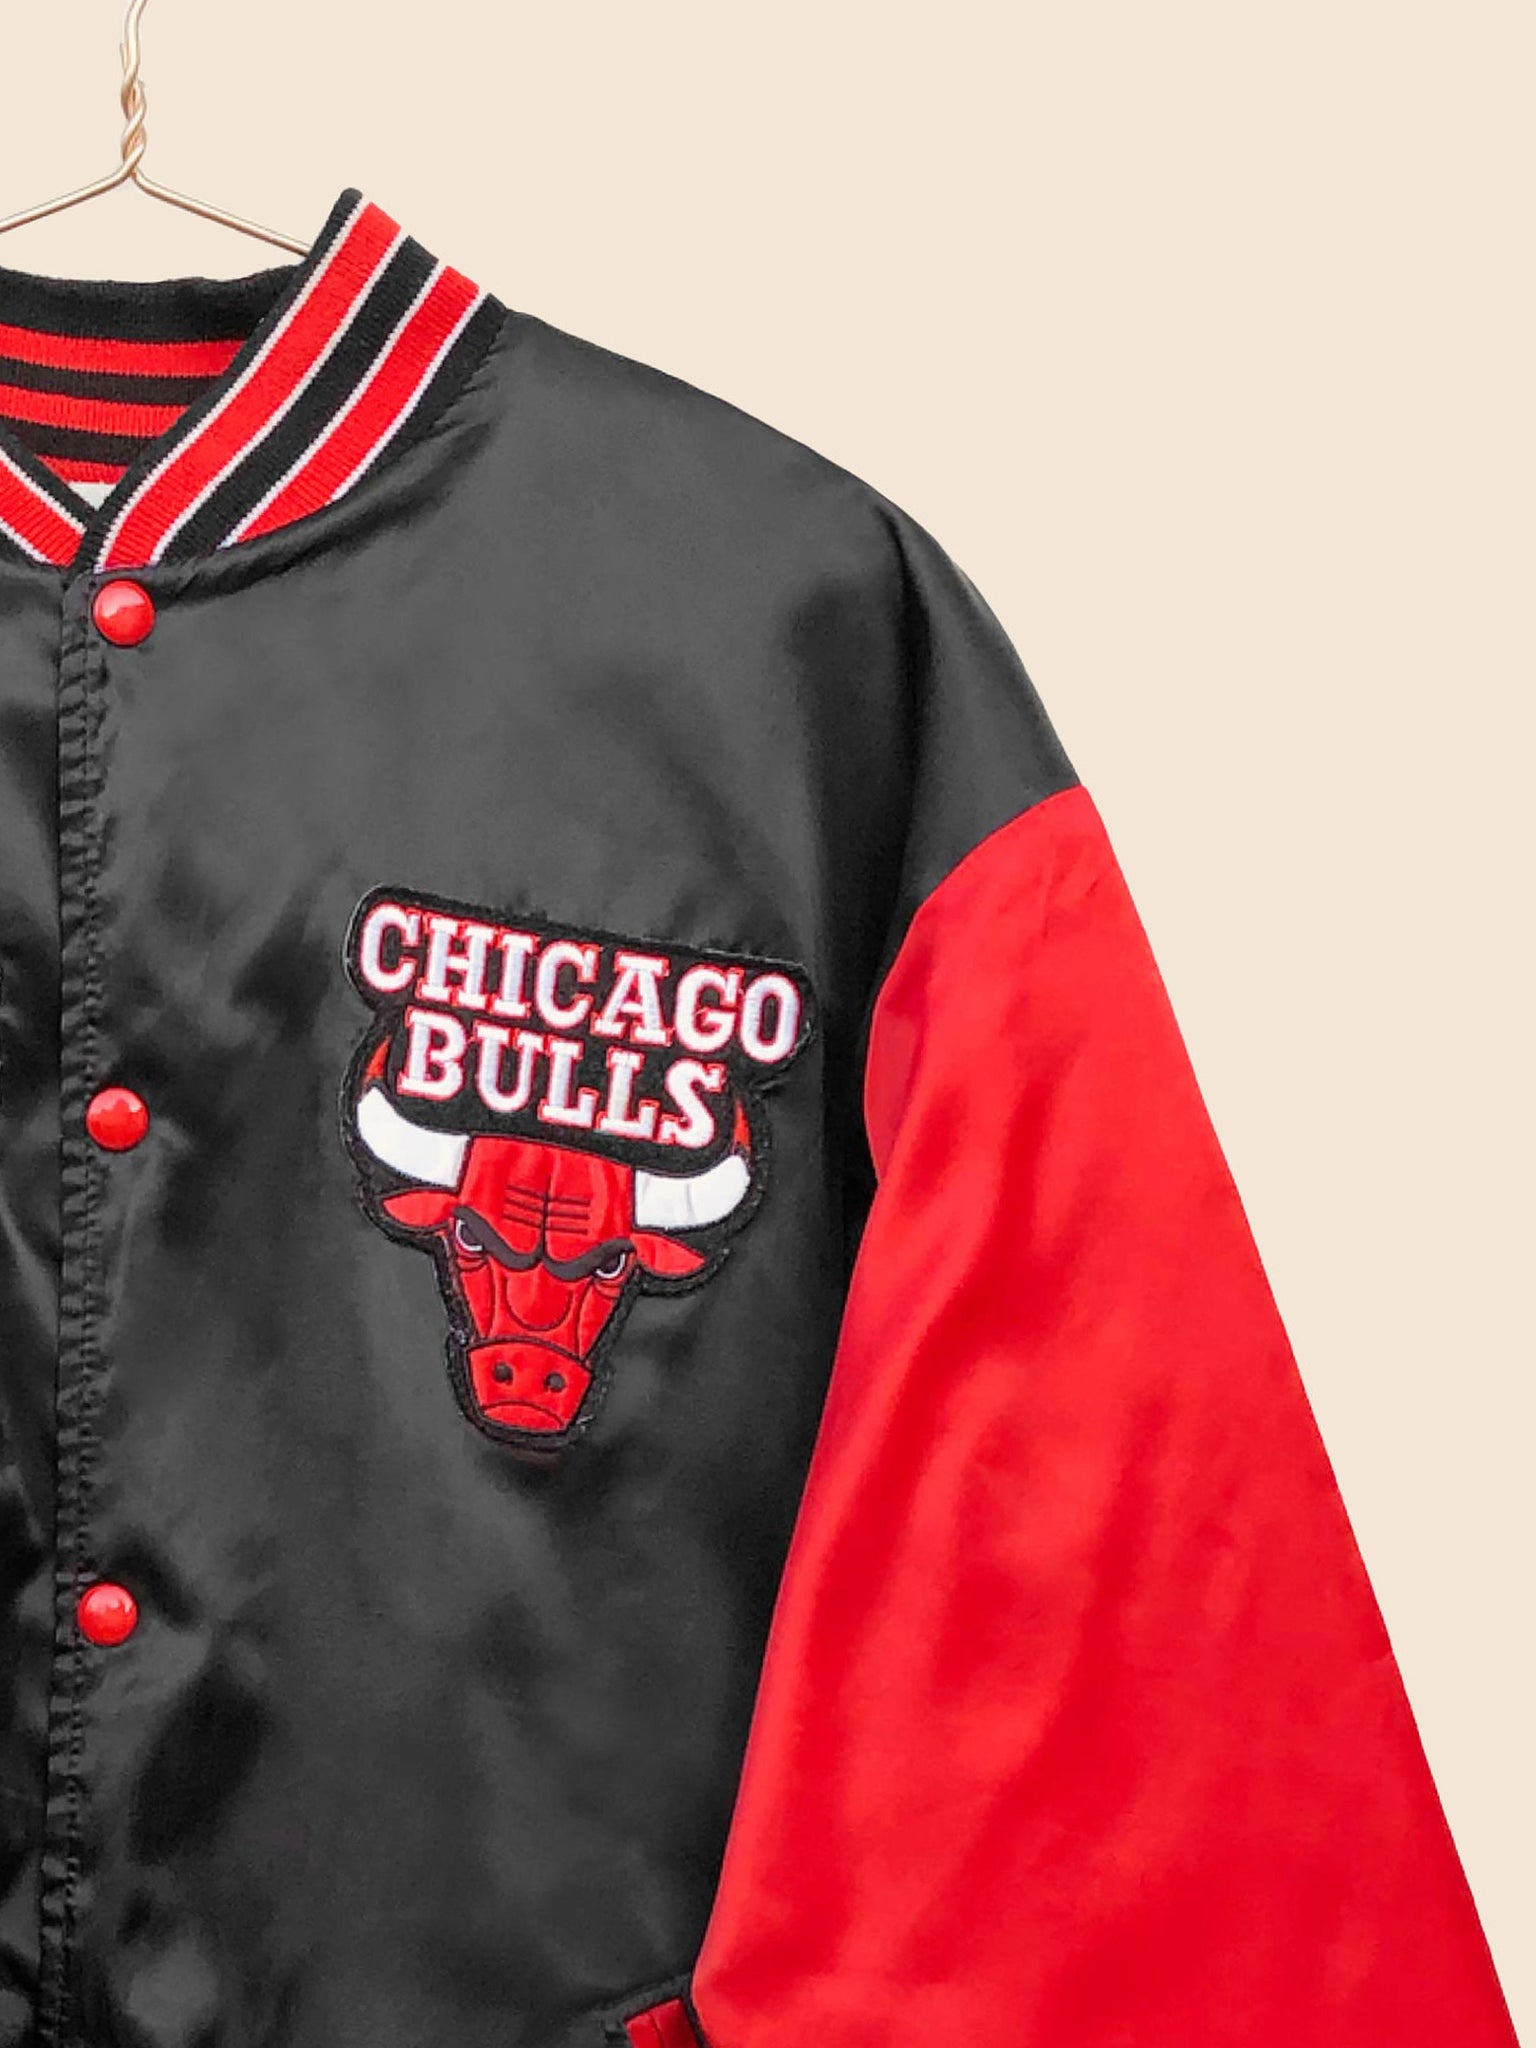 Black Chicago Bulls Jordan 23 vintage t-shirt.